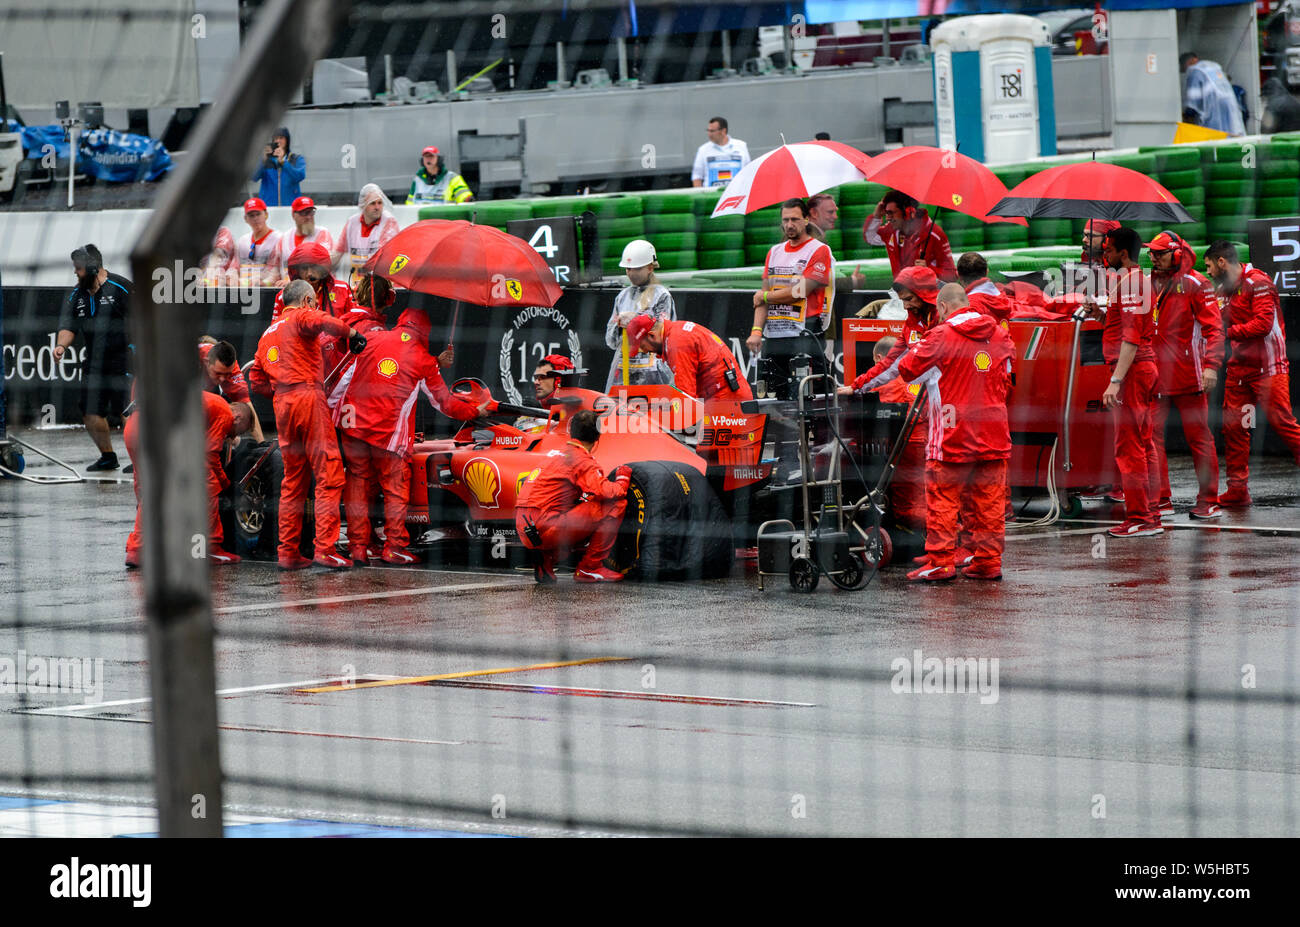 Formel 1 GP Deutschland in Hockenheim, 28. Juli 2019: Ferrari, Sebastian Vettel auf den Start Grid Stockfoto